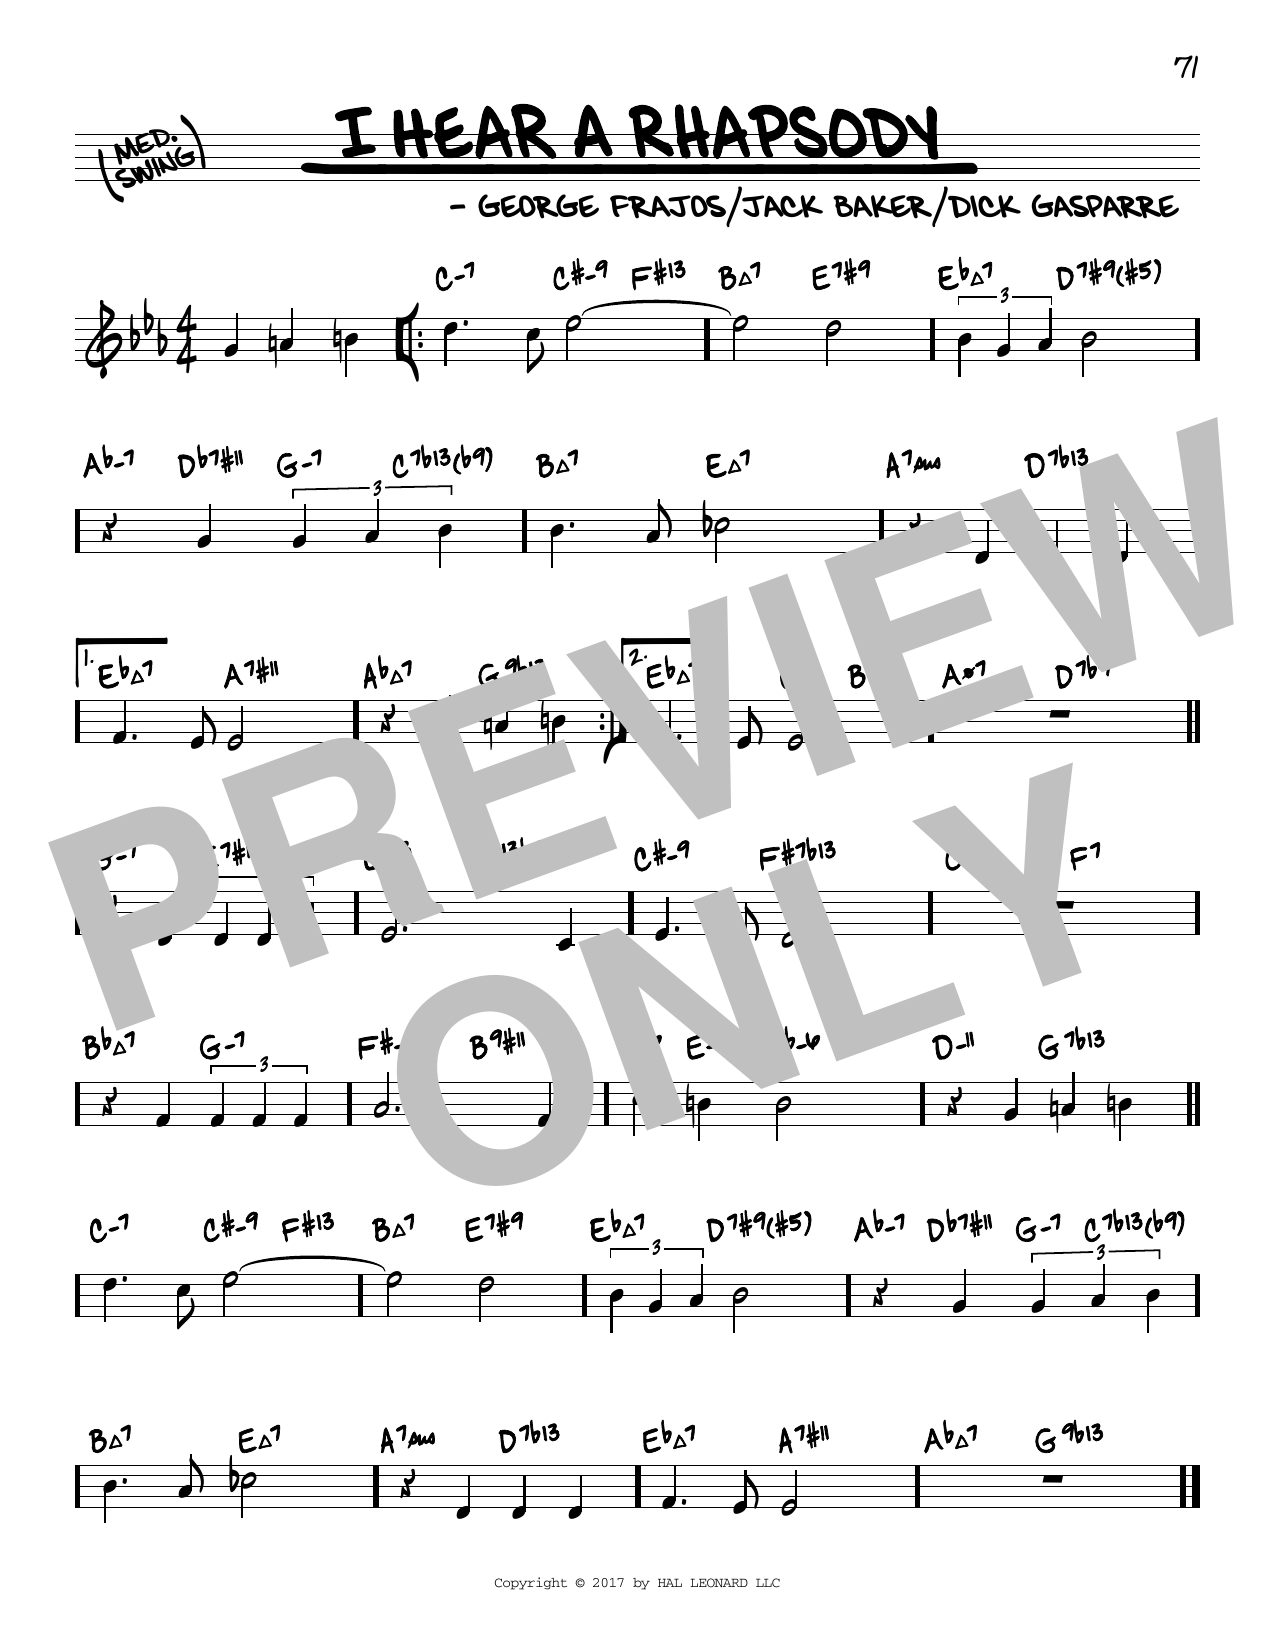 George Frajos I Hear A Rhapsody (arr. David Hazeltine) Sheet Music Notes & Chords for Real Book – Enhanced Chords - Download or Print PDF